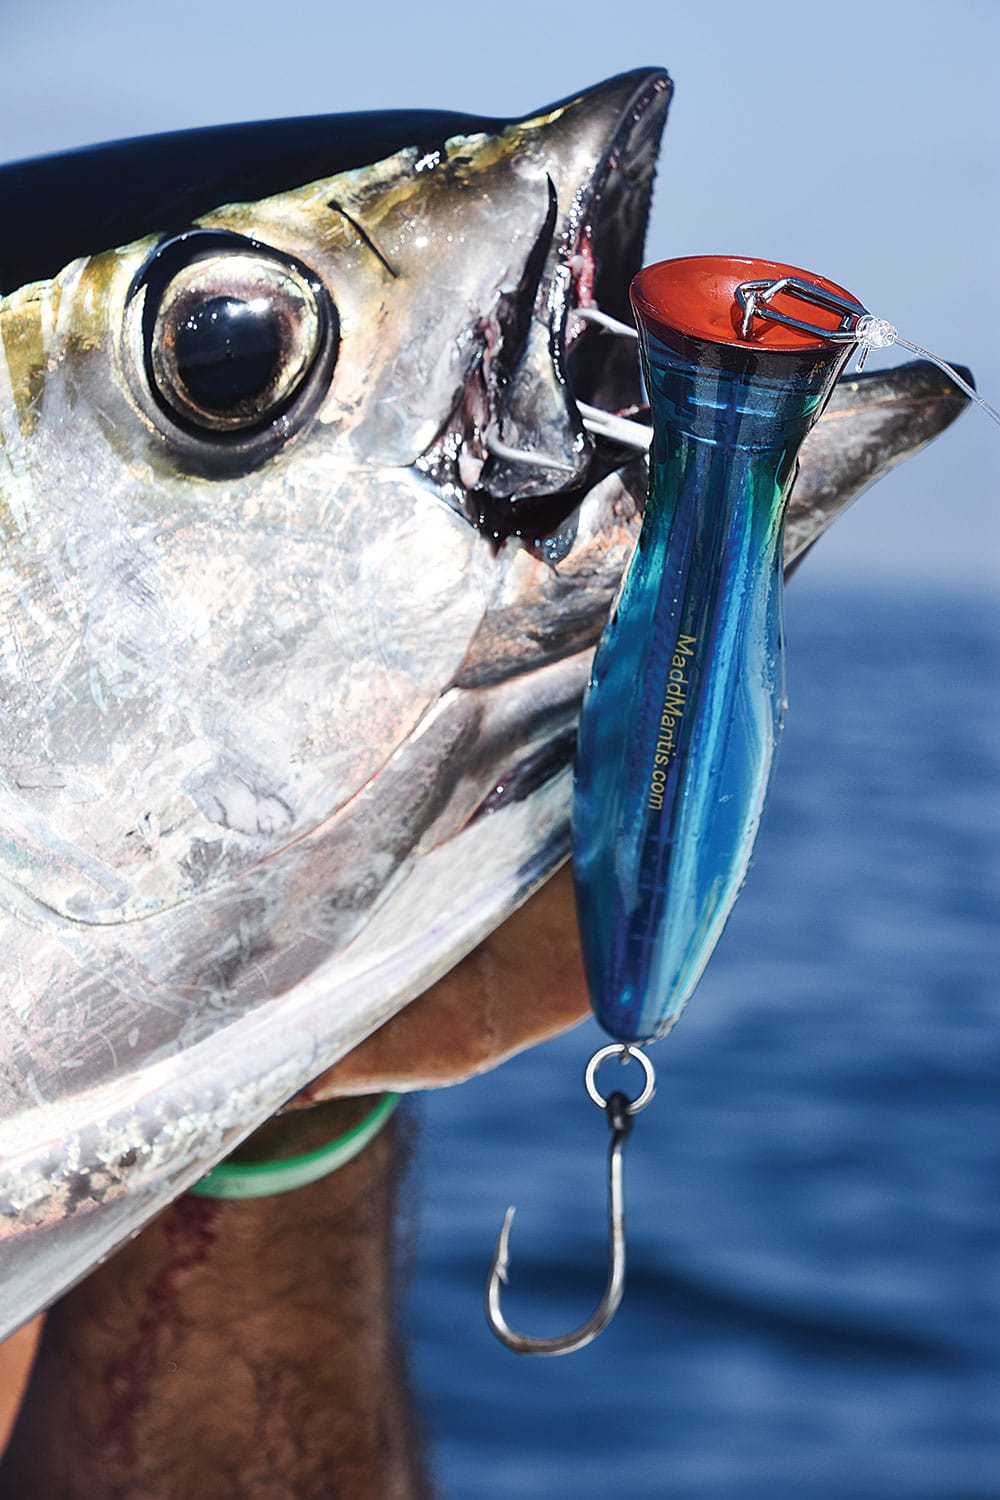 122lb Yellowfin #Tuna Caught on 20lb Braid and a Light Inshore Rod